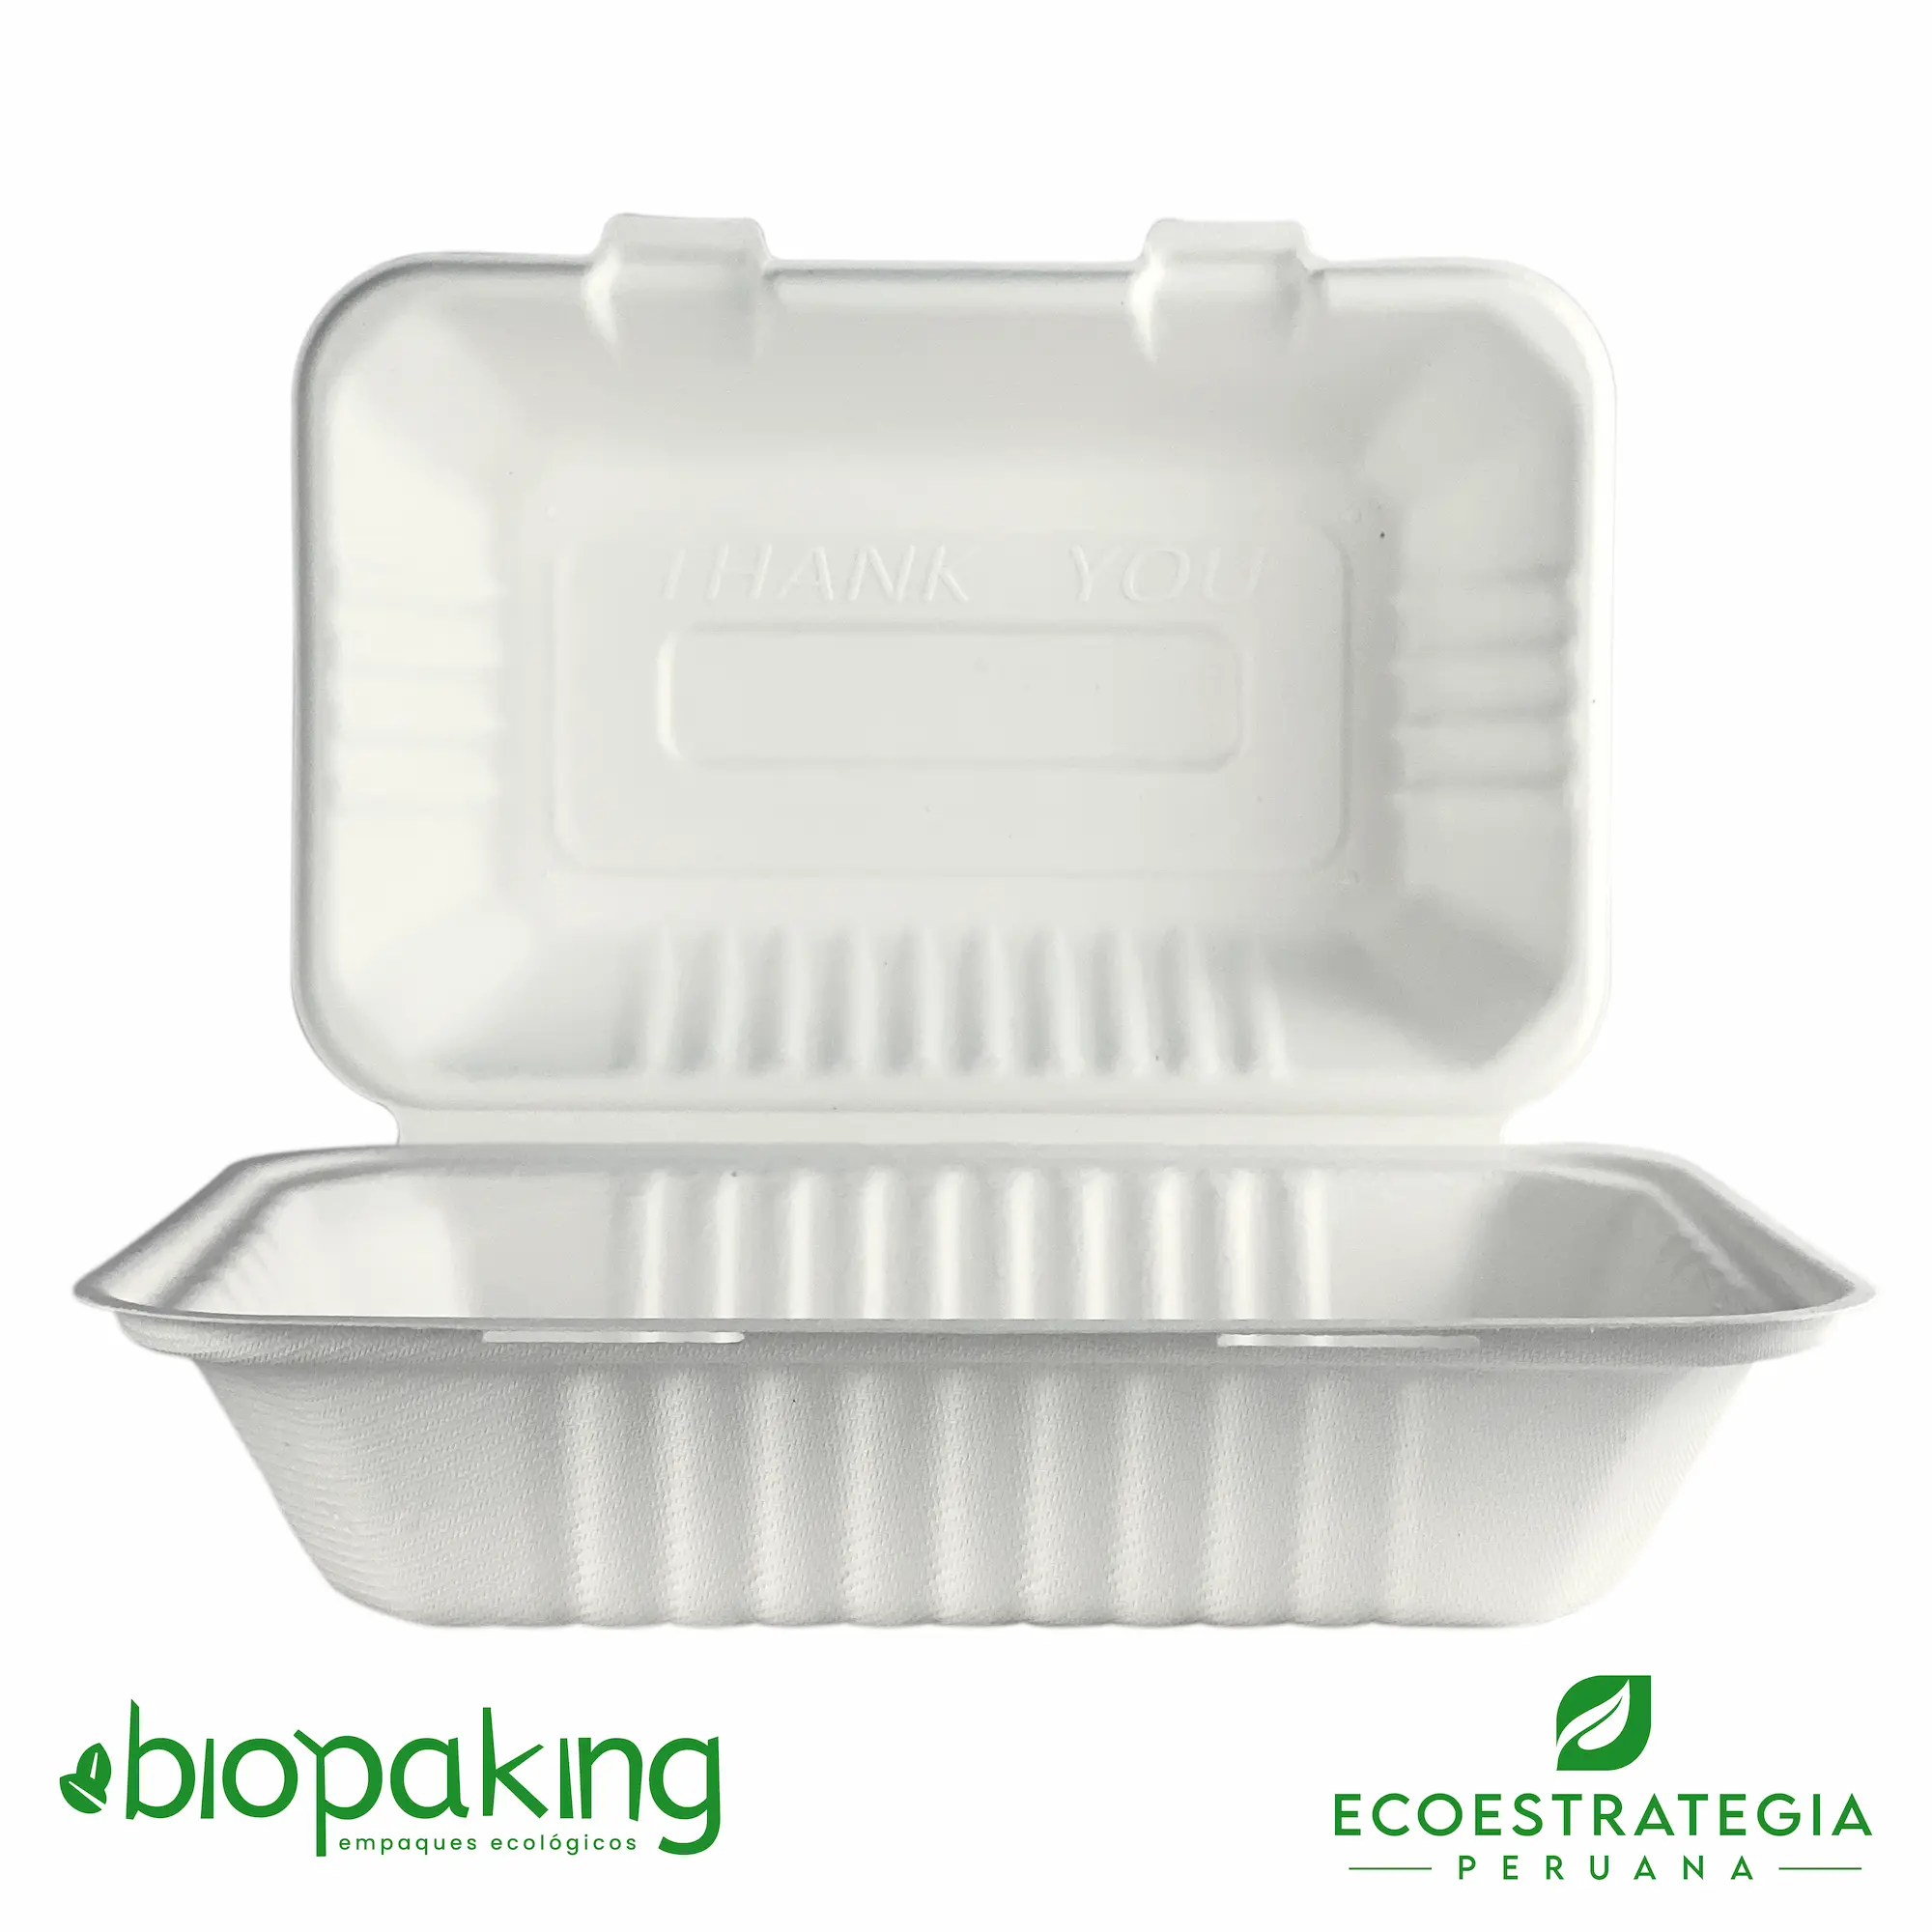 https://www.ecoestrategiaperuana.com/assets/img/productos/envases-biodegradables/ct5/envase-biodegradable-ct5-ep06-0.webp